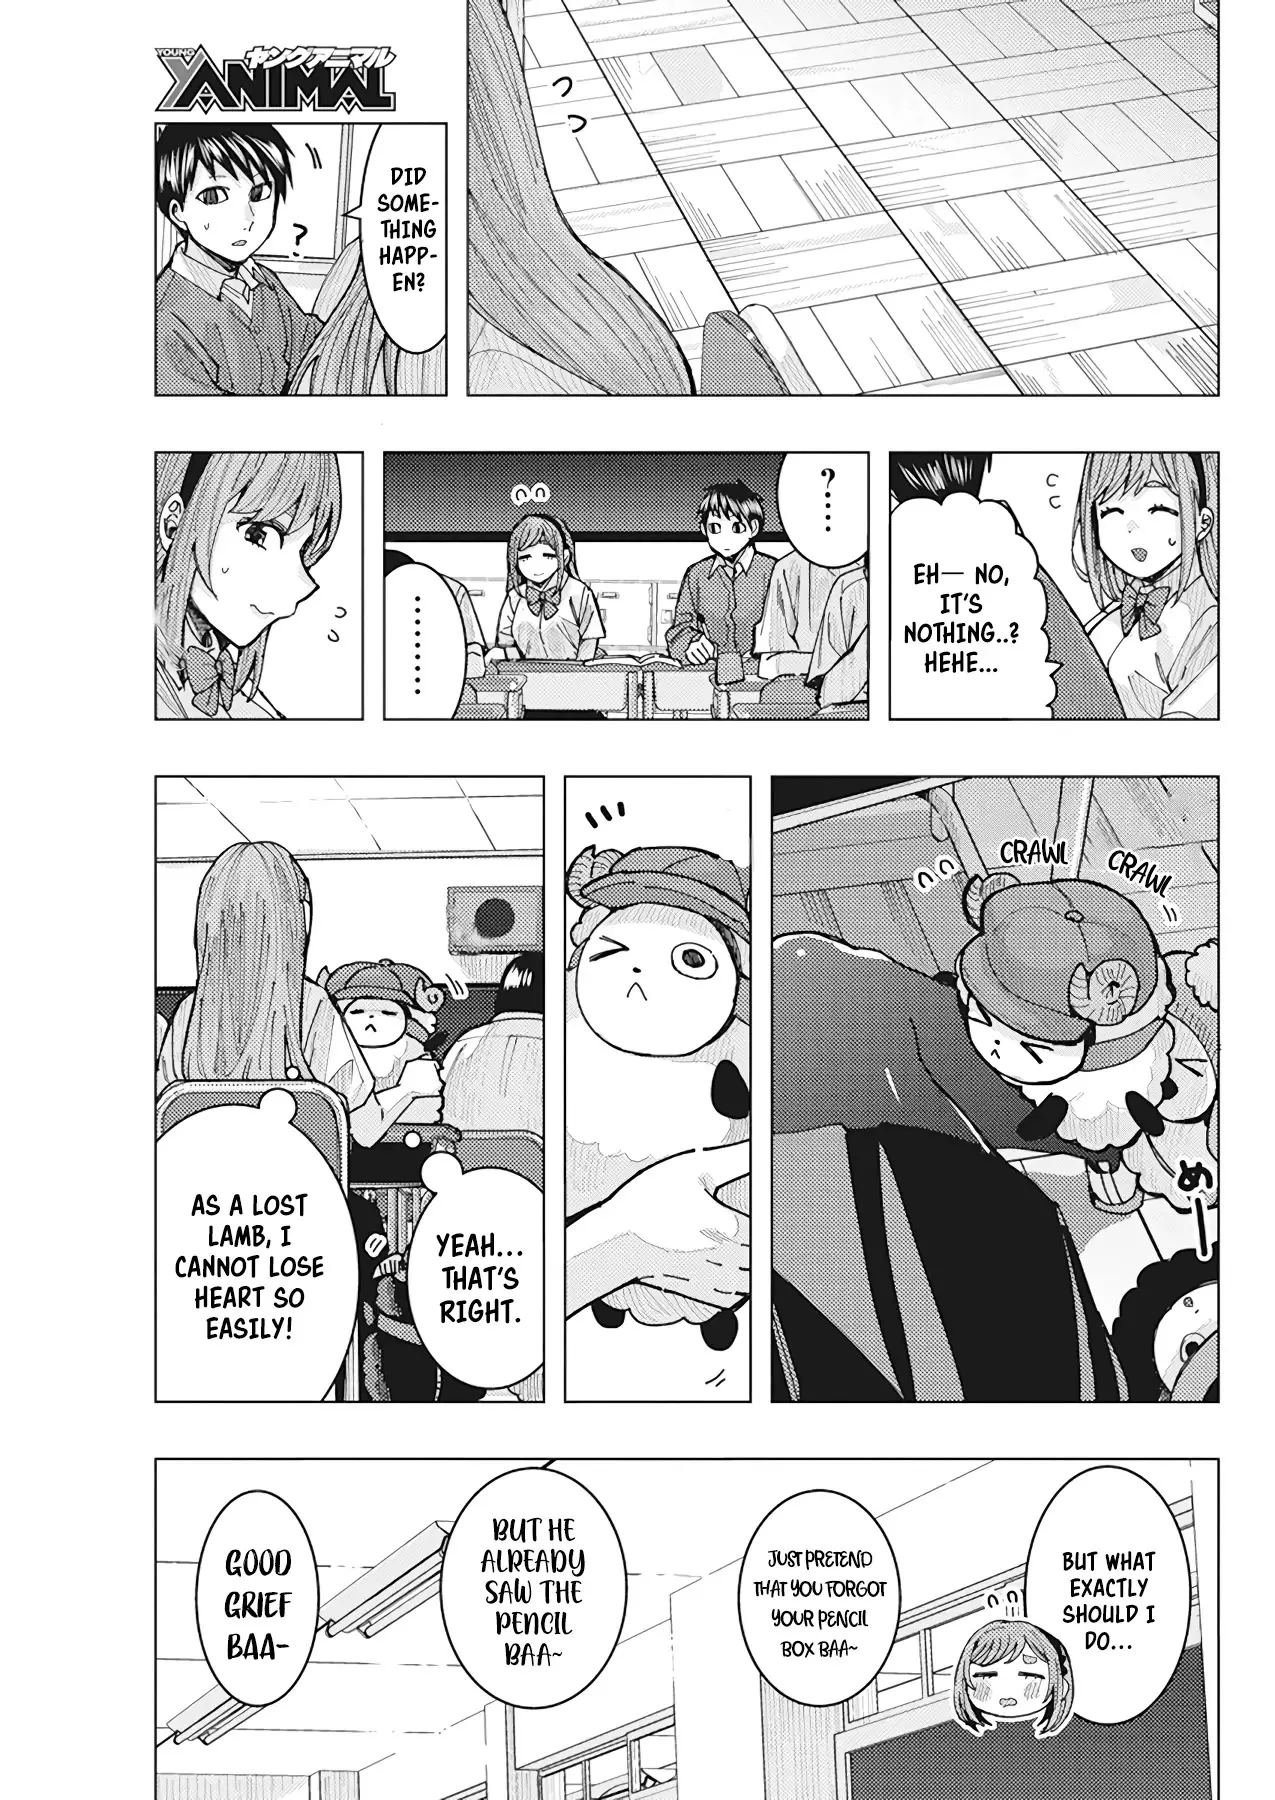 "nobukuni-San" Does She Like Me? - 18 page 8-41fa57e7